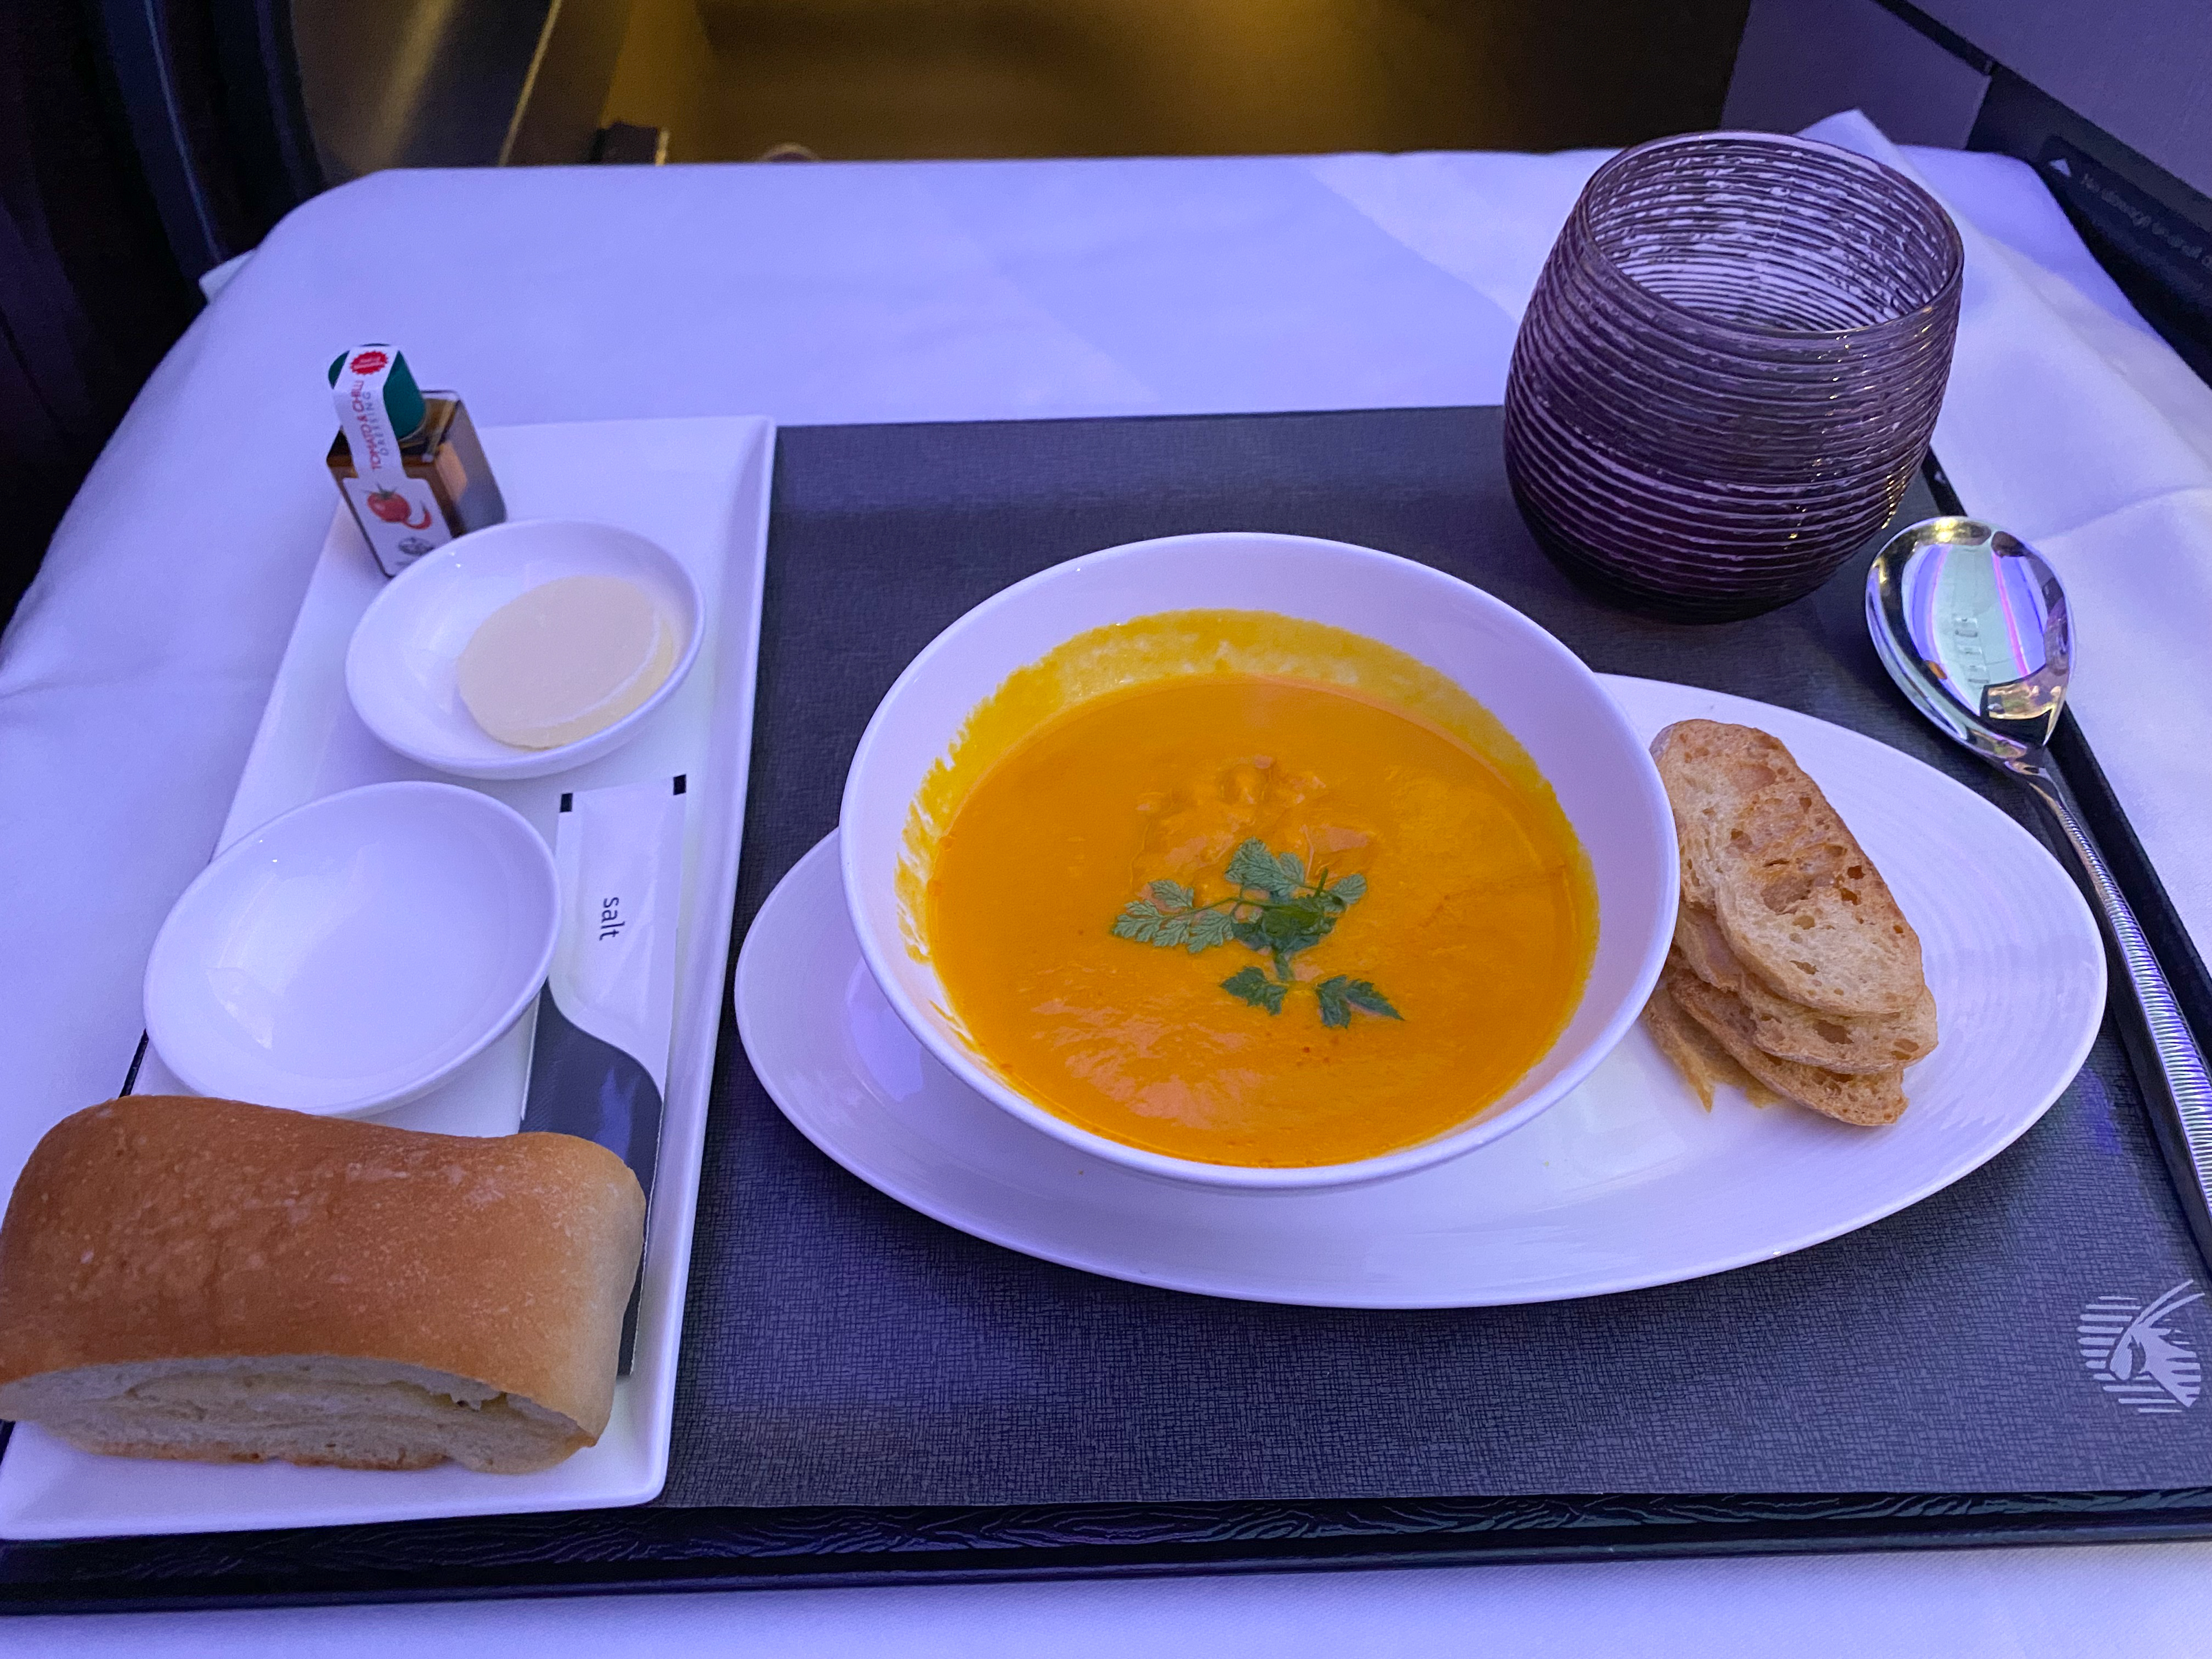 qatar airways business class food